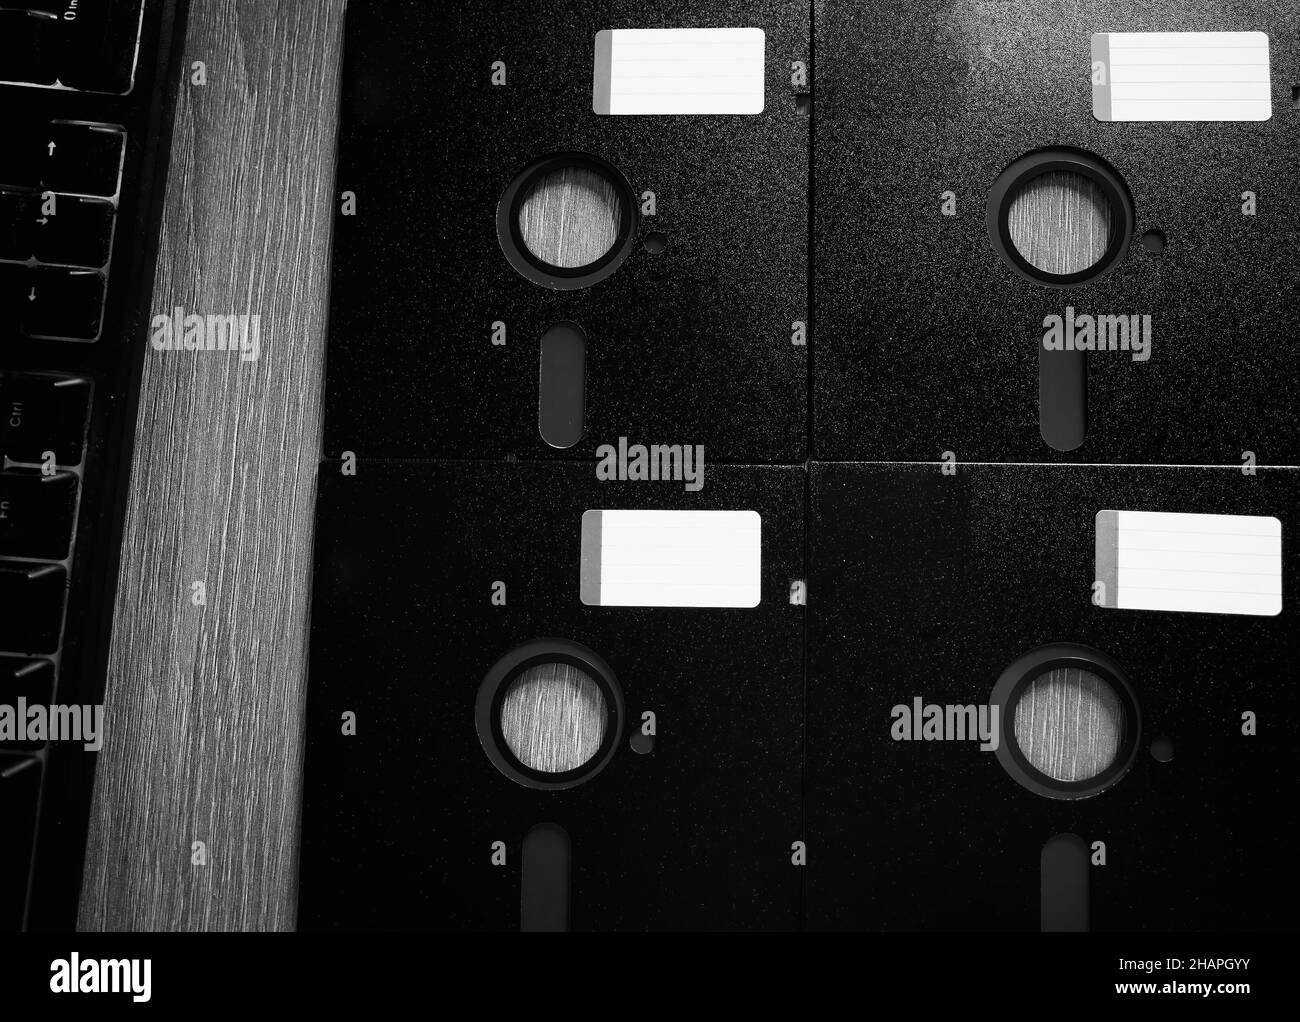 Four floppy disks 5.25 inch vintage computer storage background Stock Photo